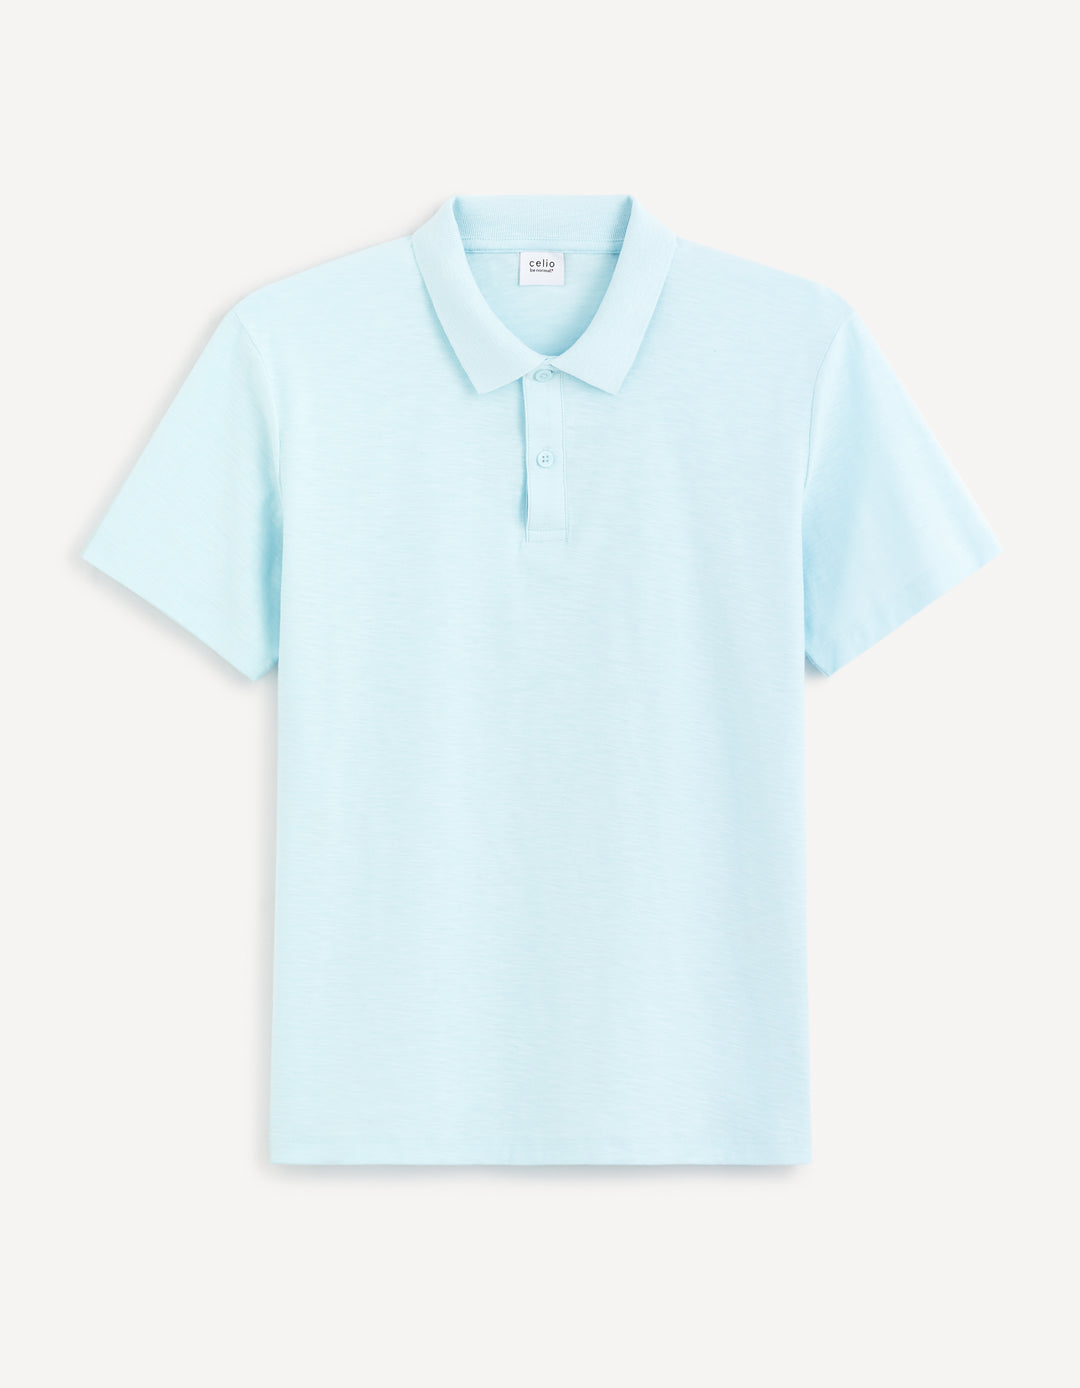 100% cotton jersey polo shirt